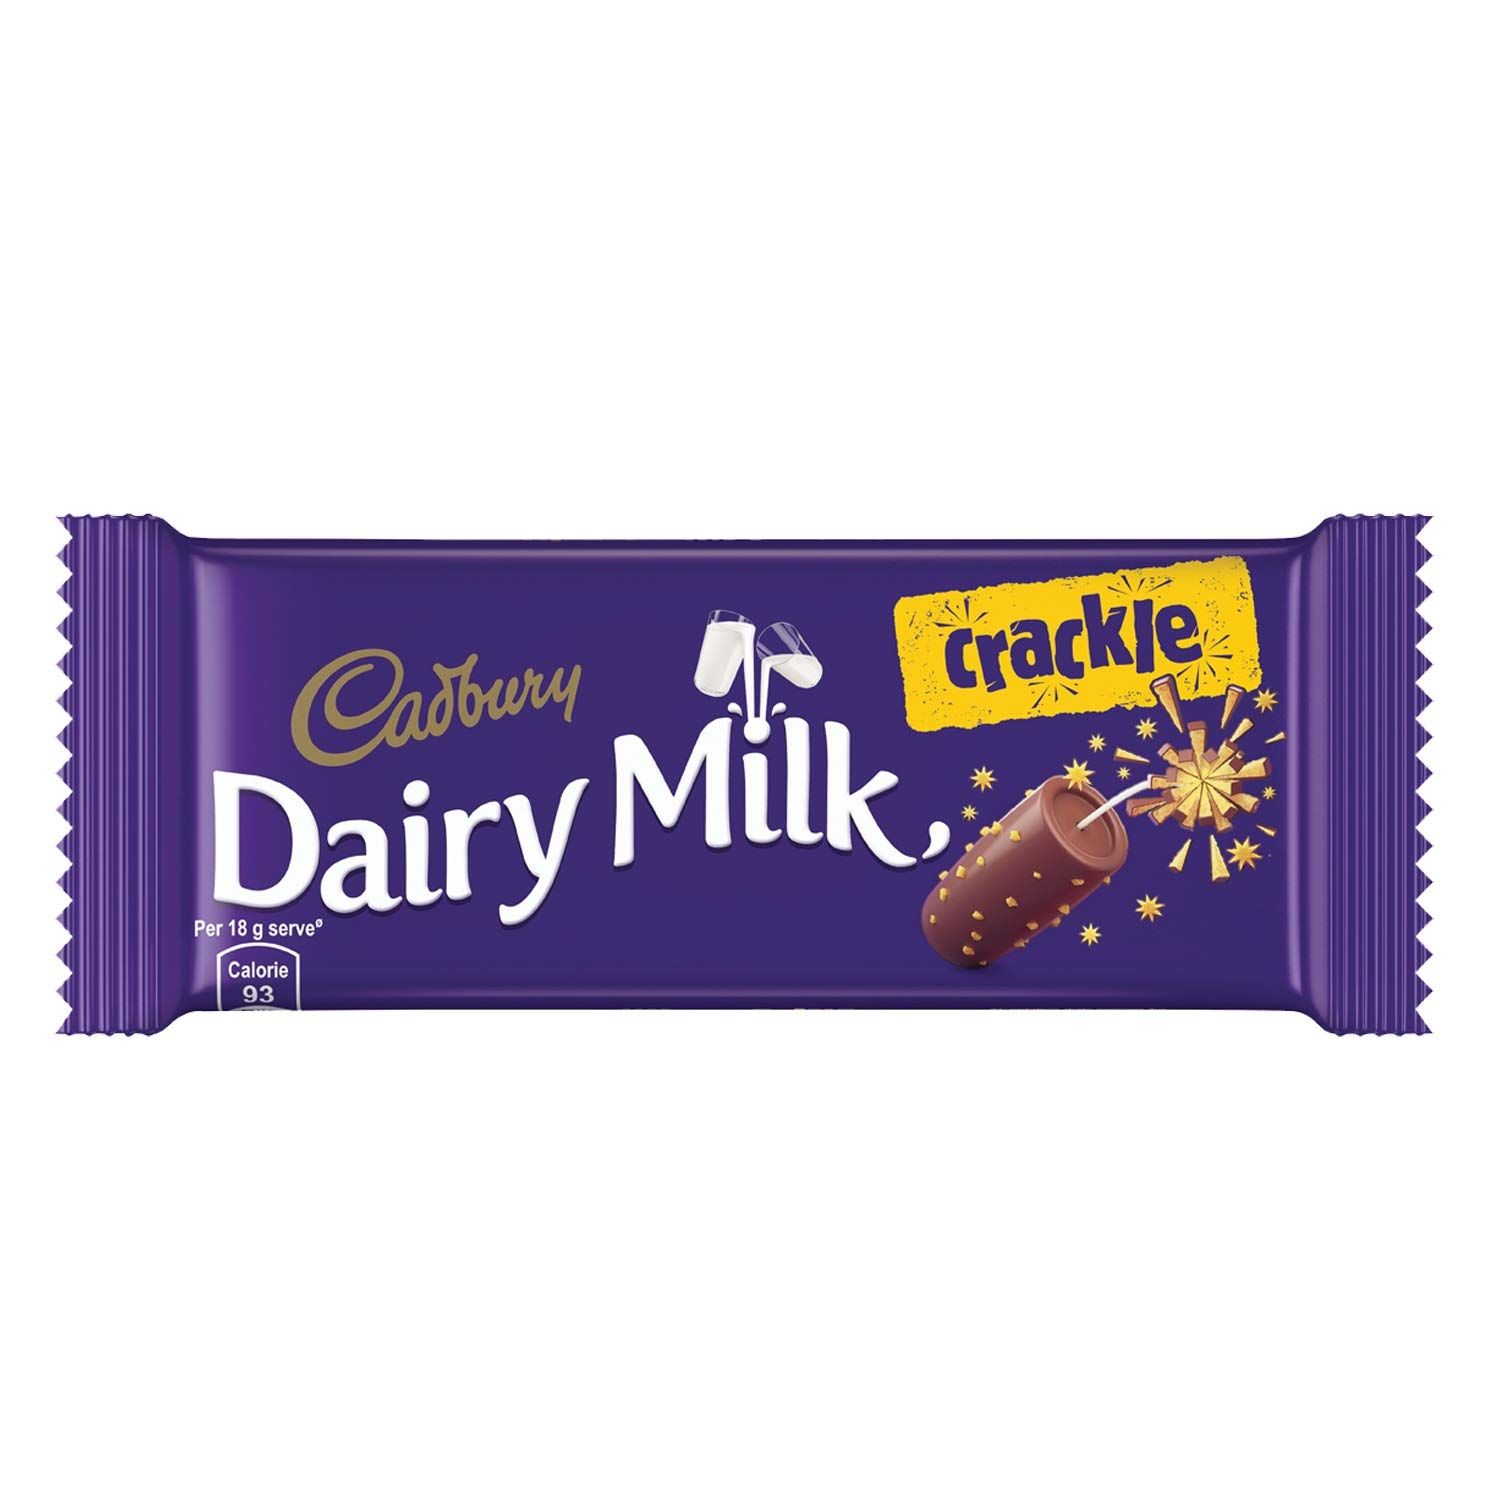 Cadbury Dairy Milk Crackle Chocolate Bar Image